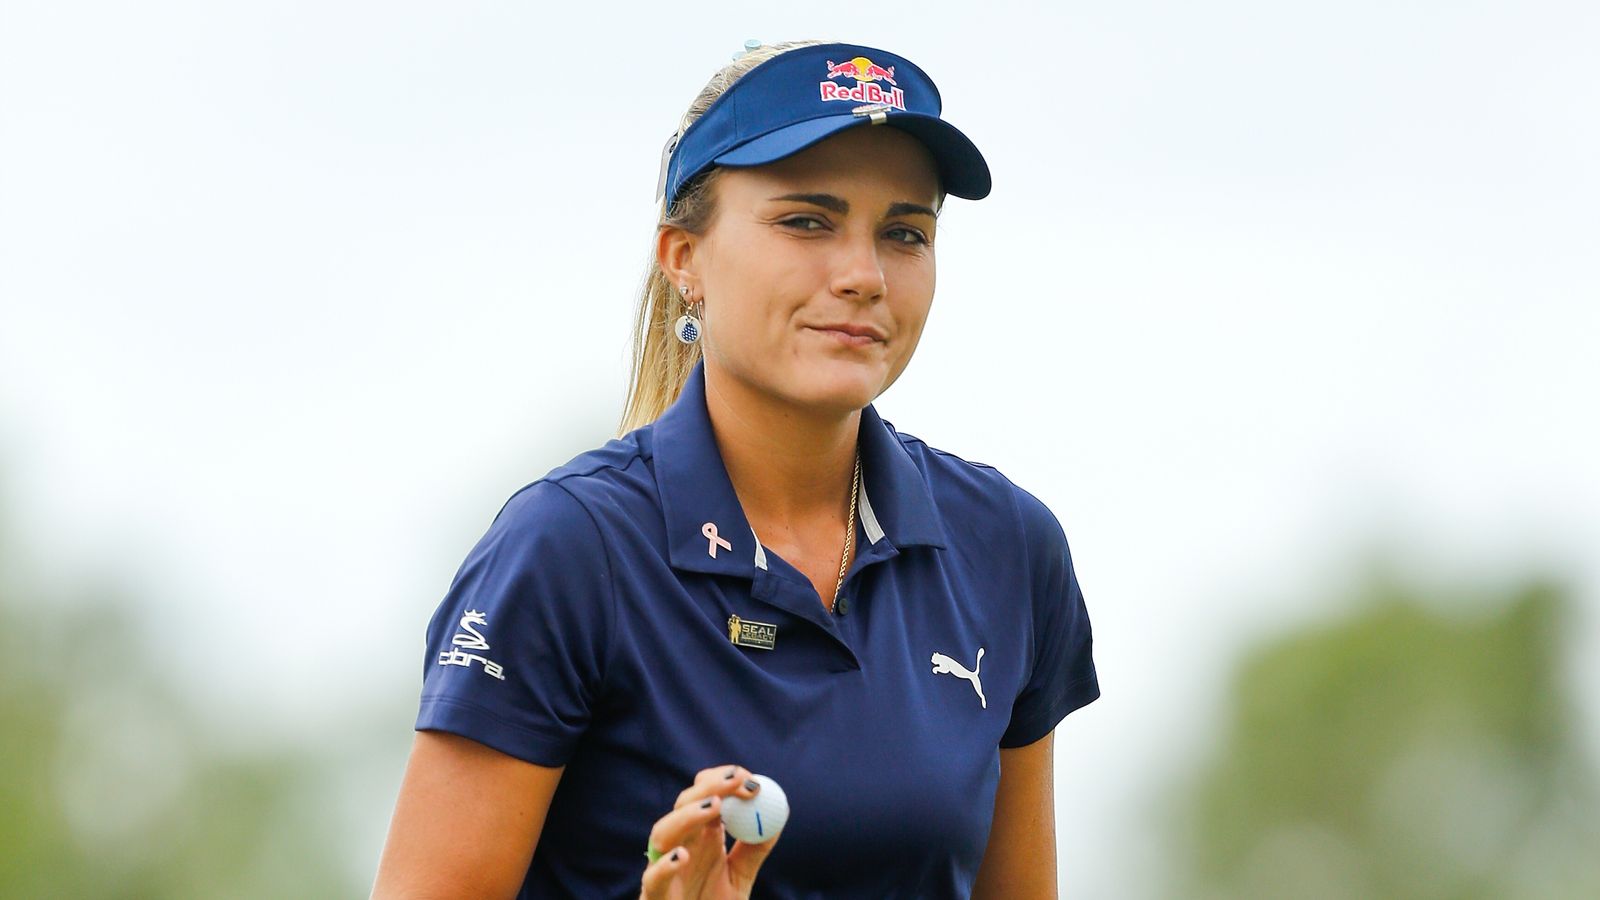 Lexi Thompson eases to big win in season finale on LPGA Tour | Golf ...